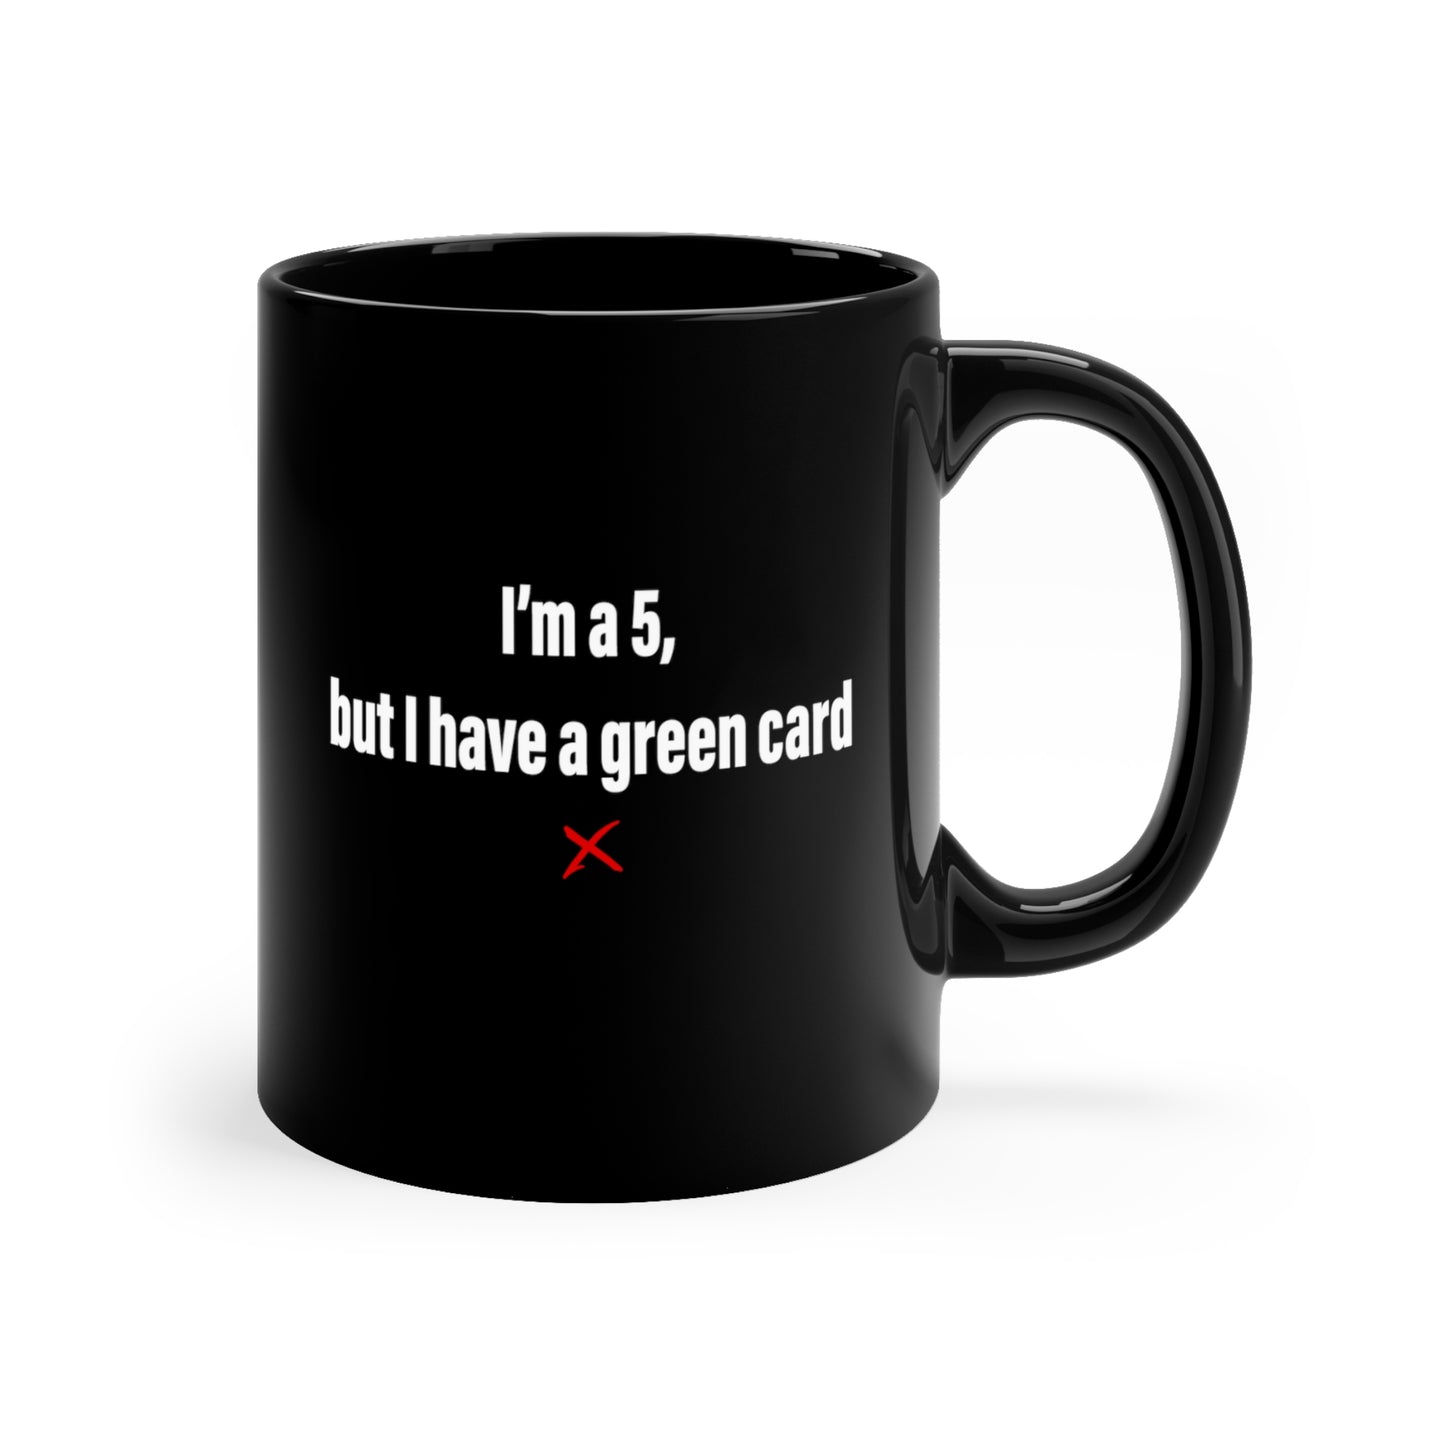 I'm a 5, but I have a green card - Mug